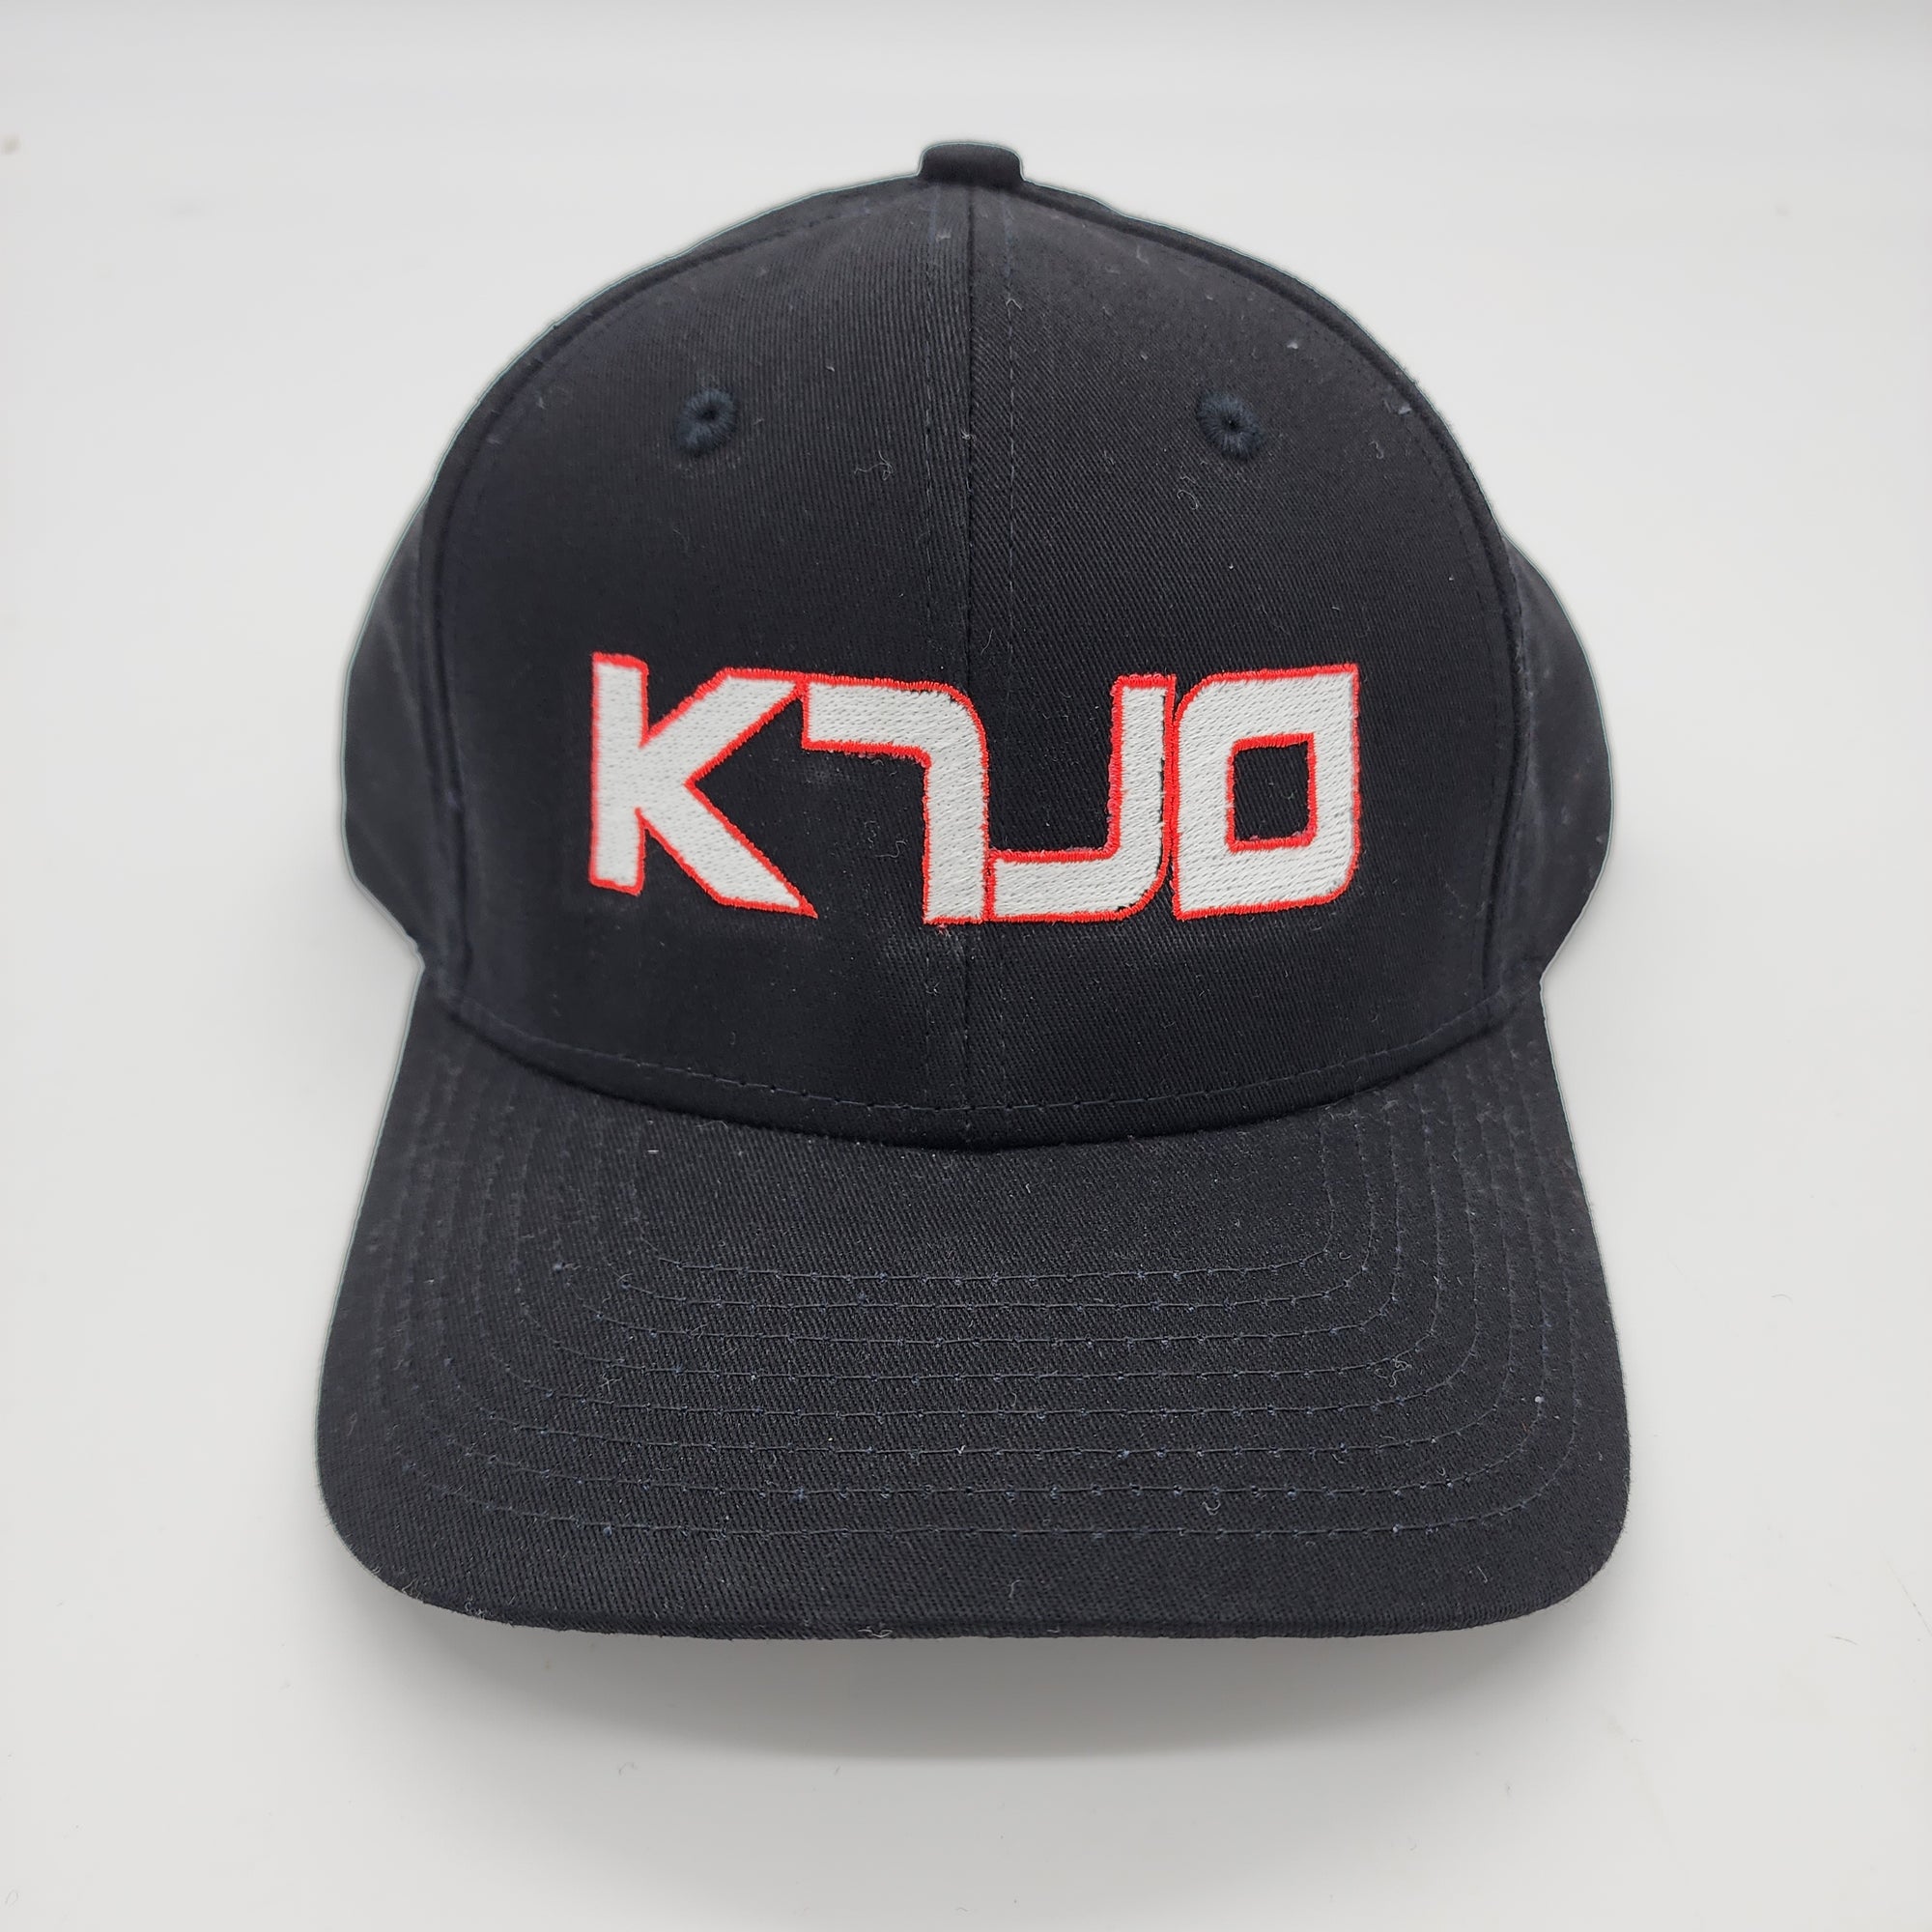 KTJO Adjustable Snap Back Sports Cap - Black